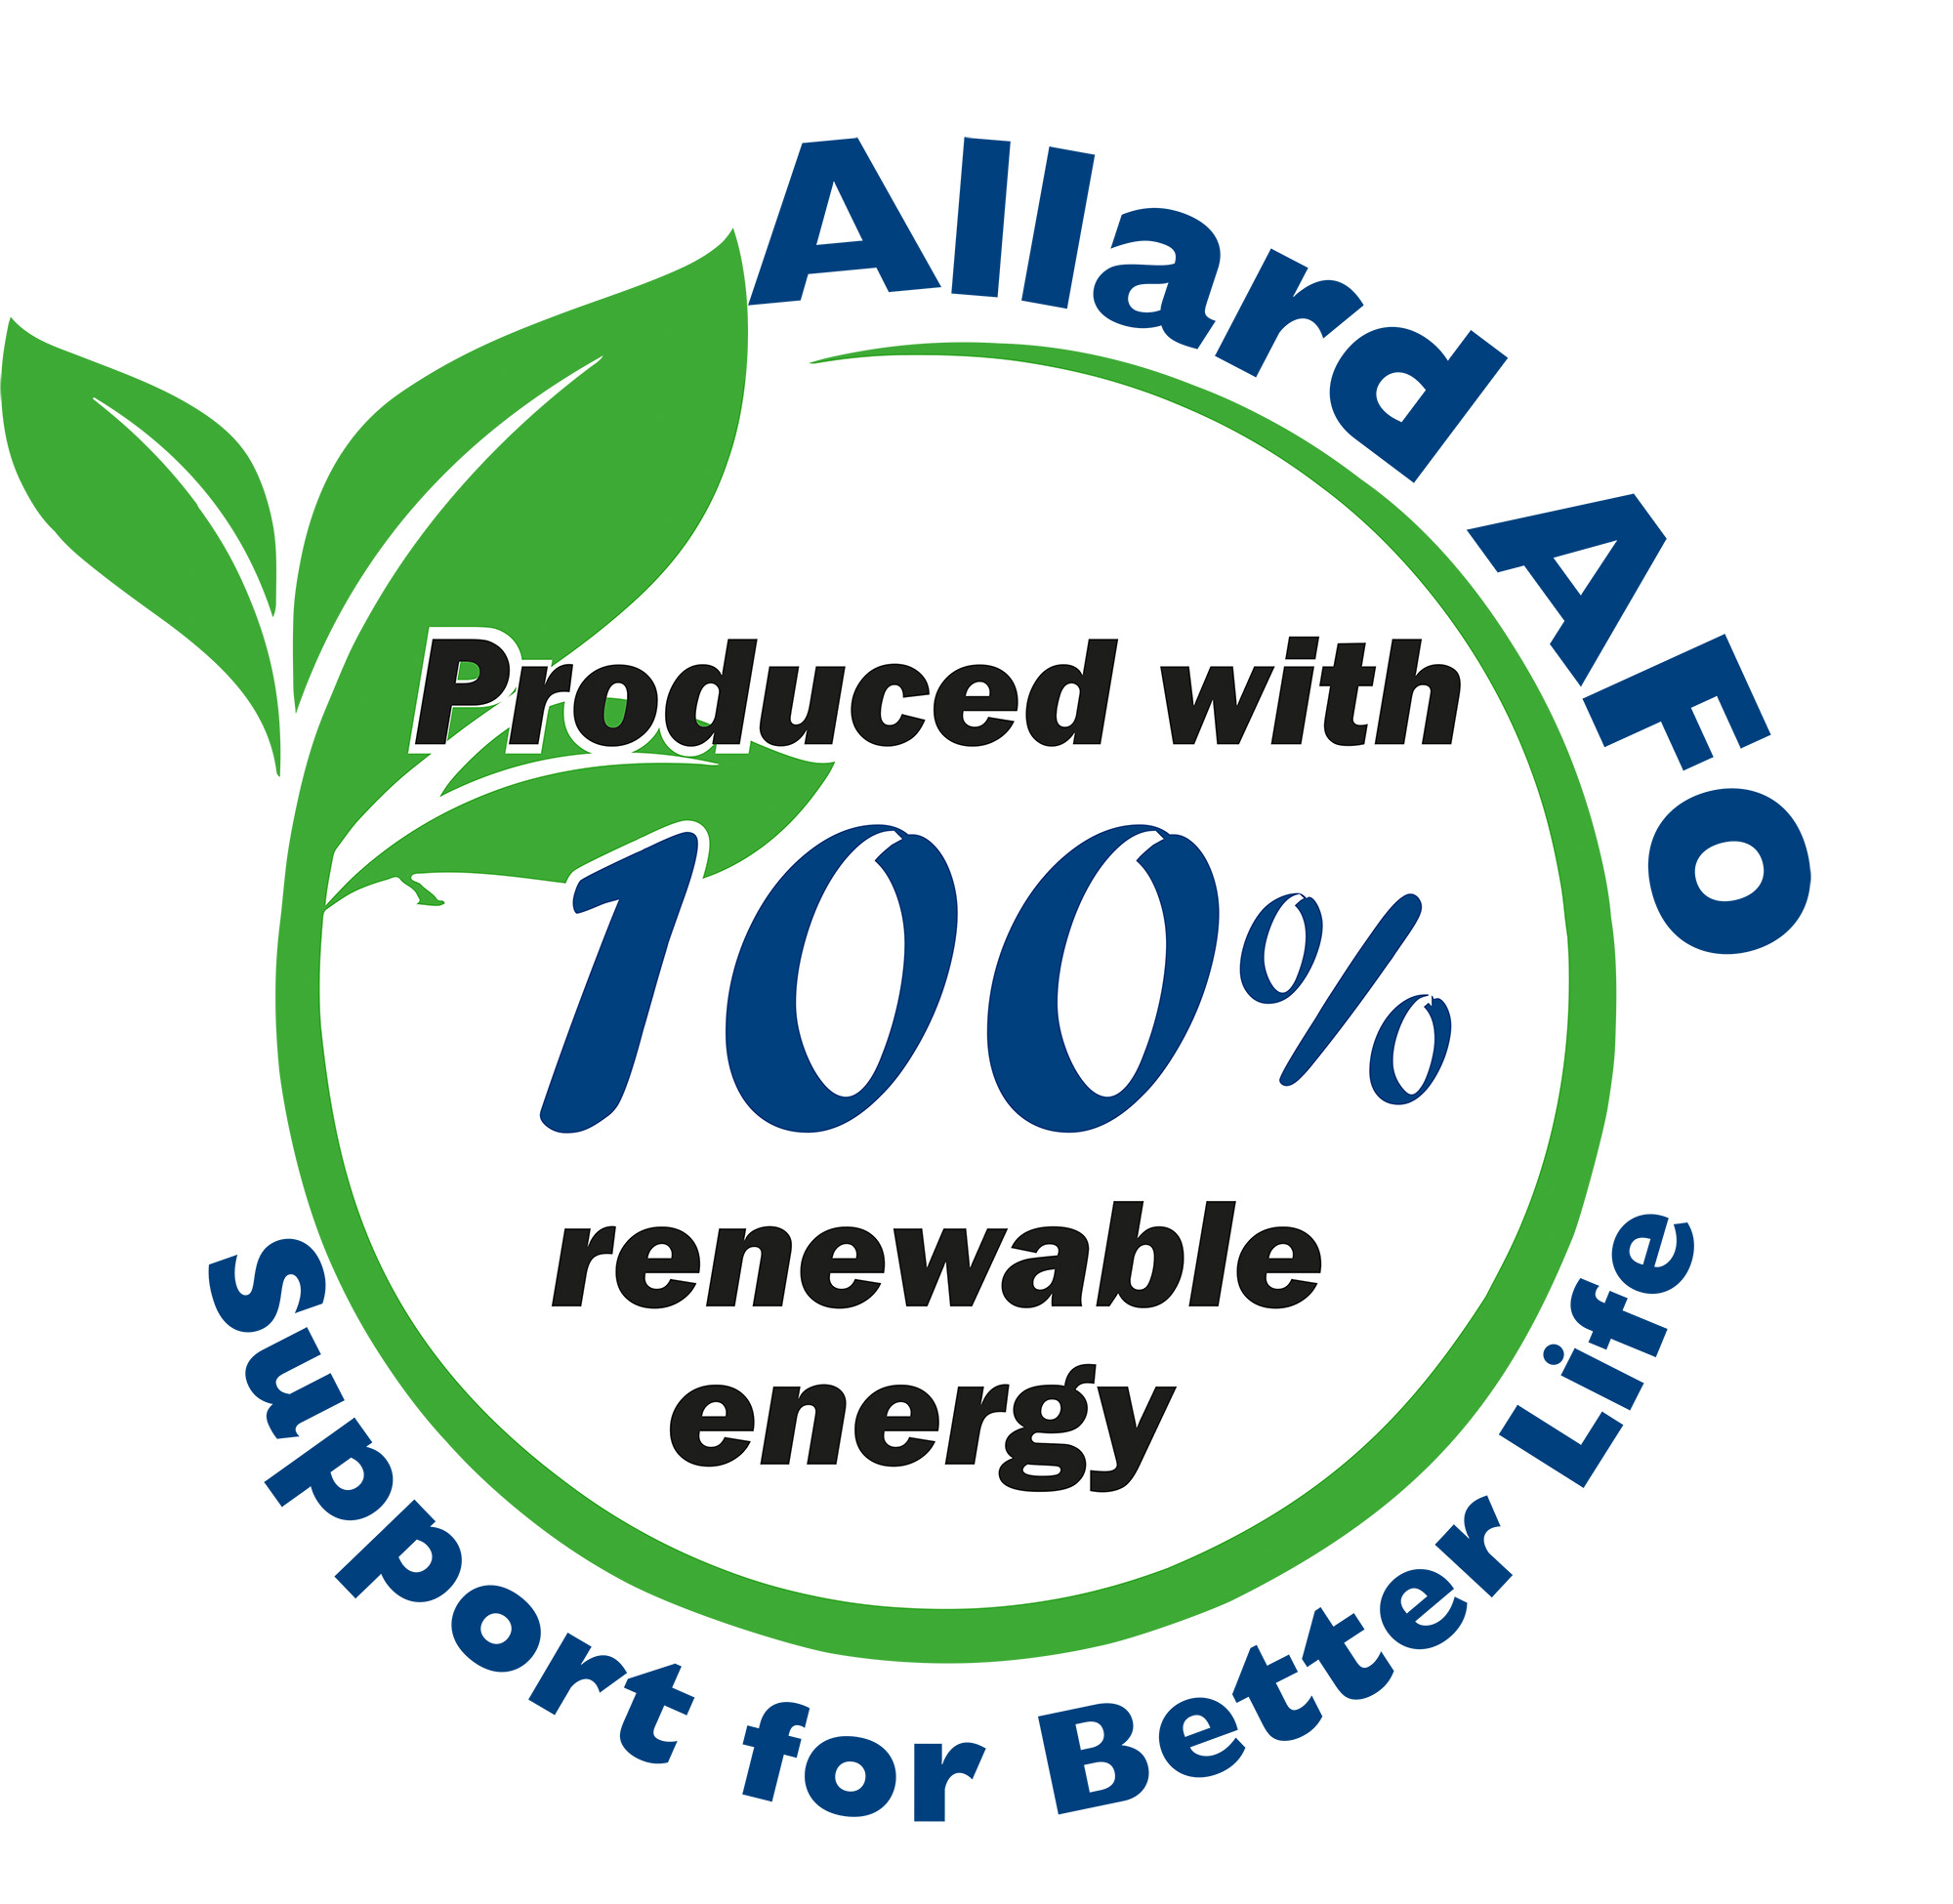 Allard AFO - produced with 100% renewable energy